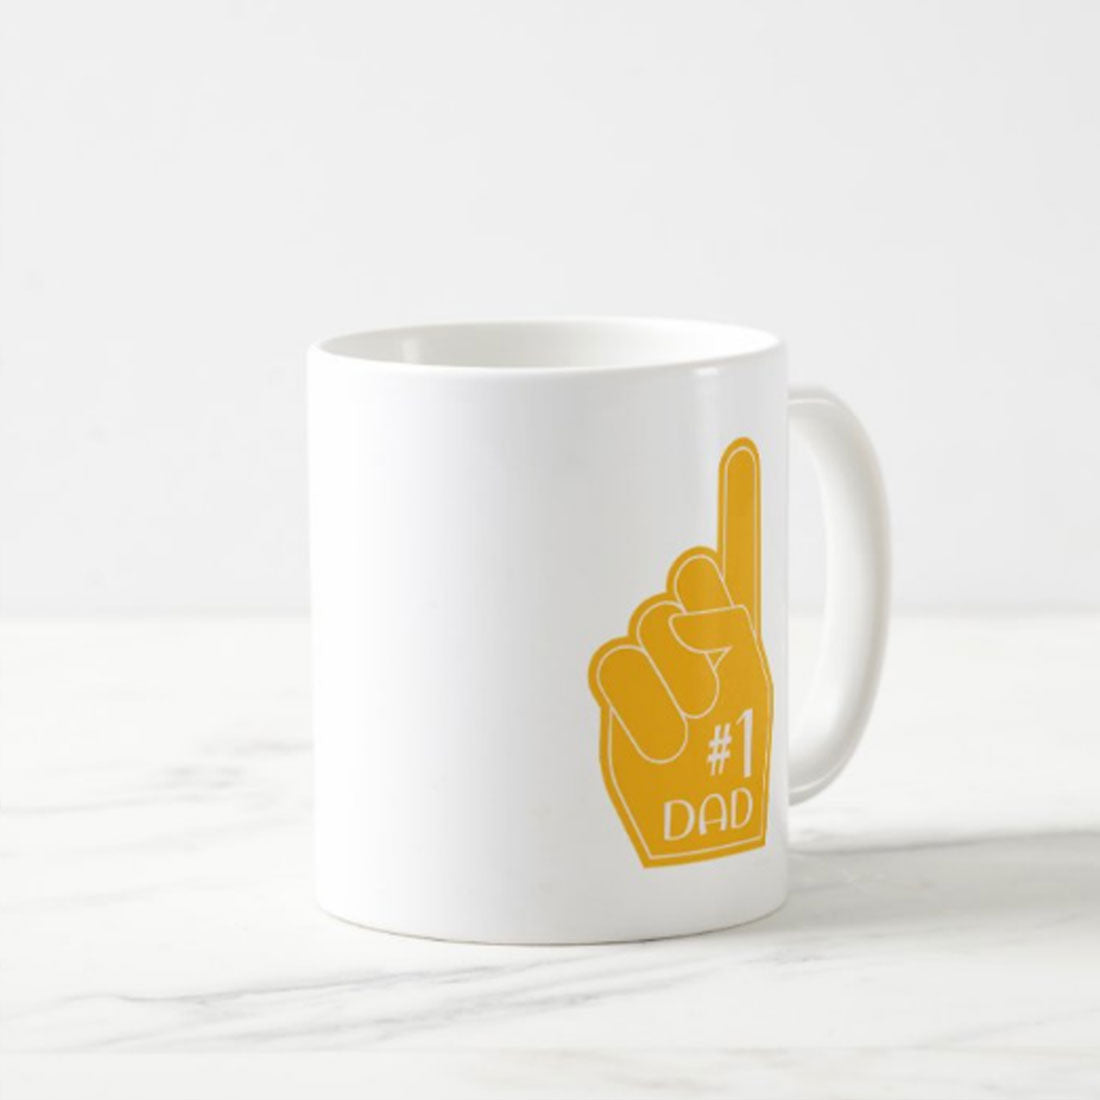 Ceramic Designer Tea Coffee Mug Gift for Dad - Hashtag Dad